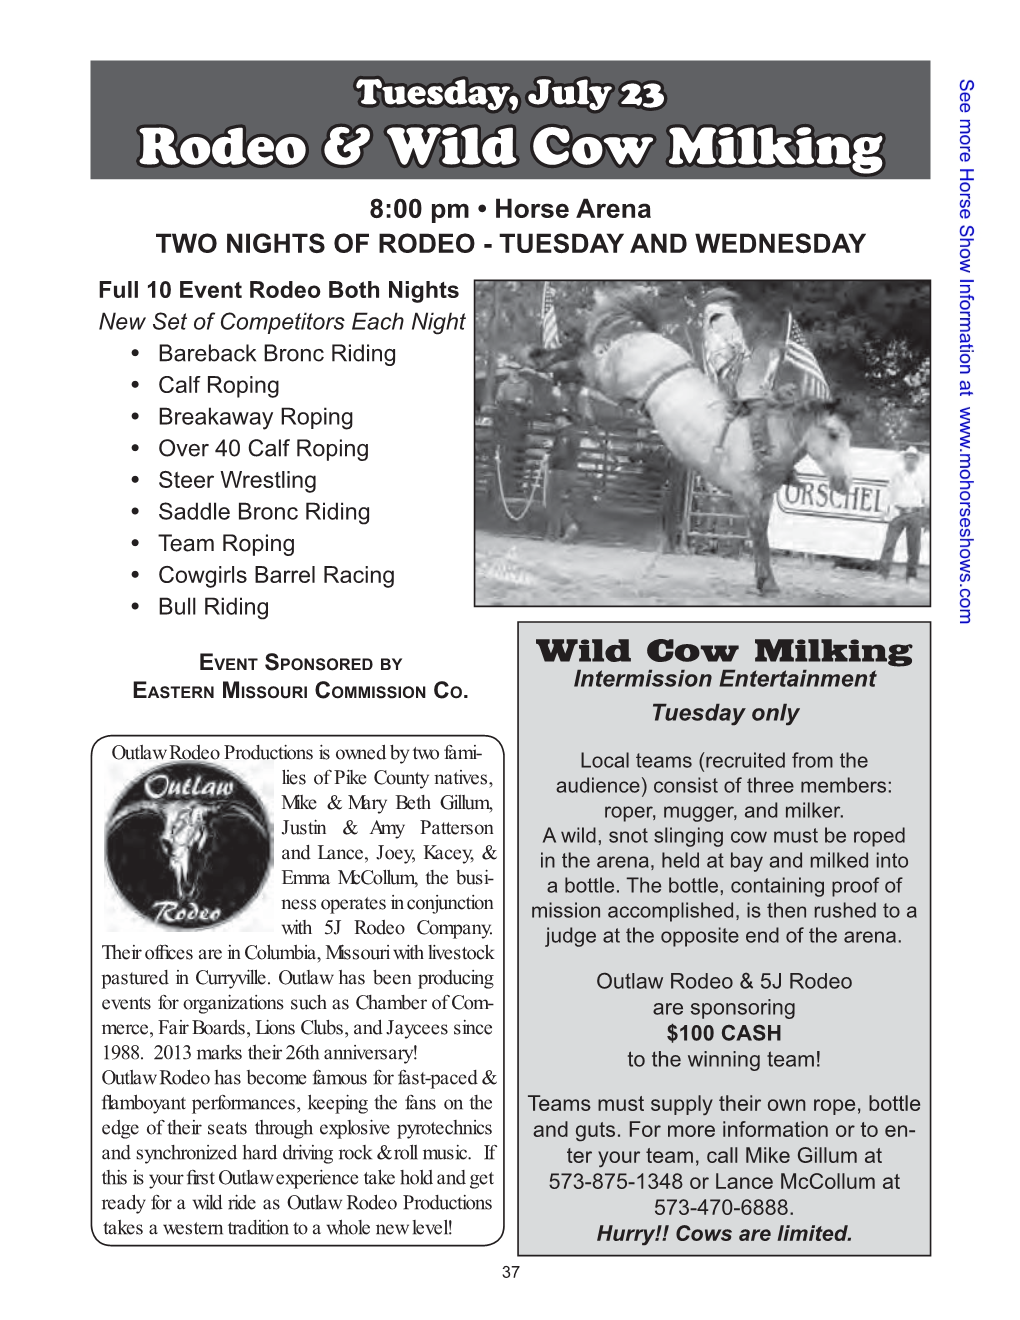 Rodeo & Wild Cow Milking